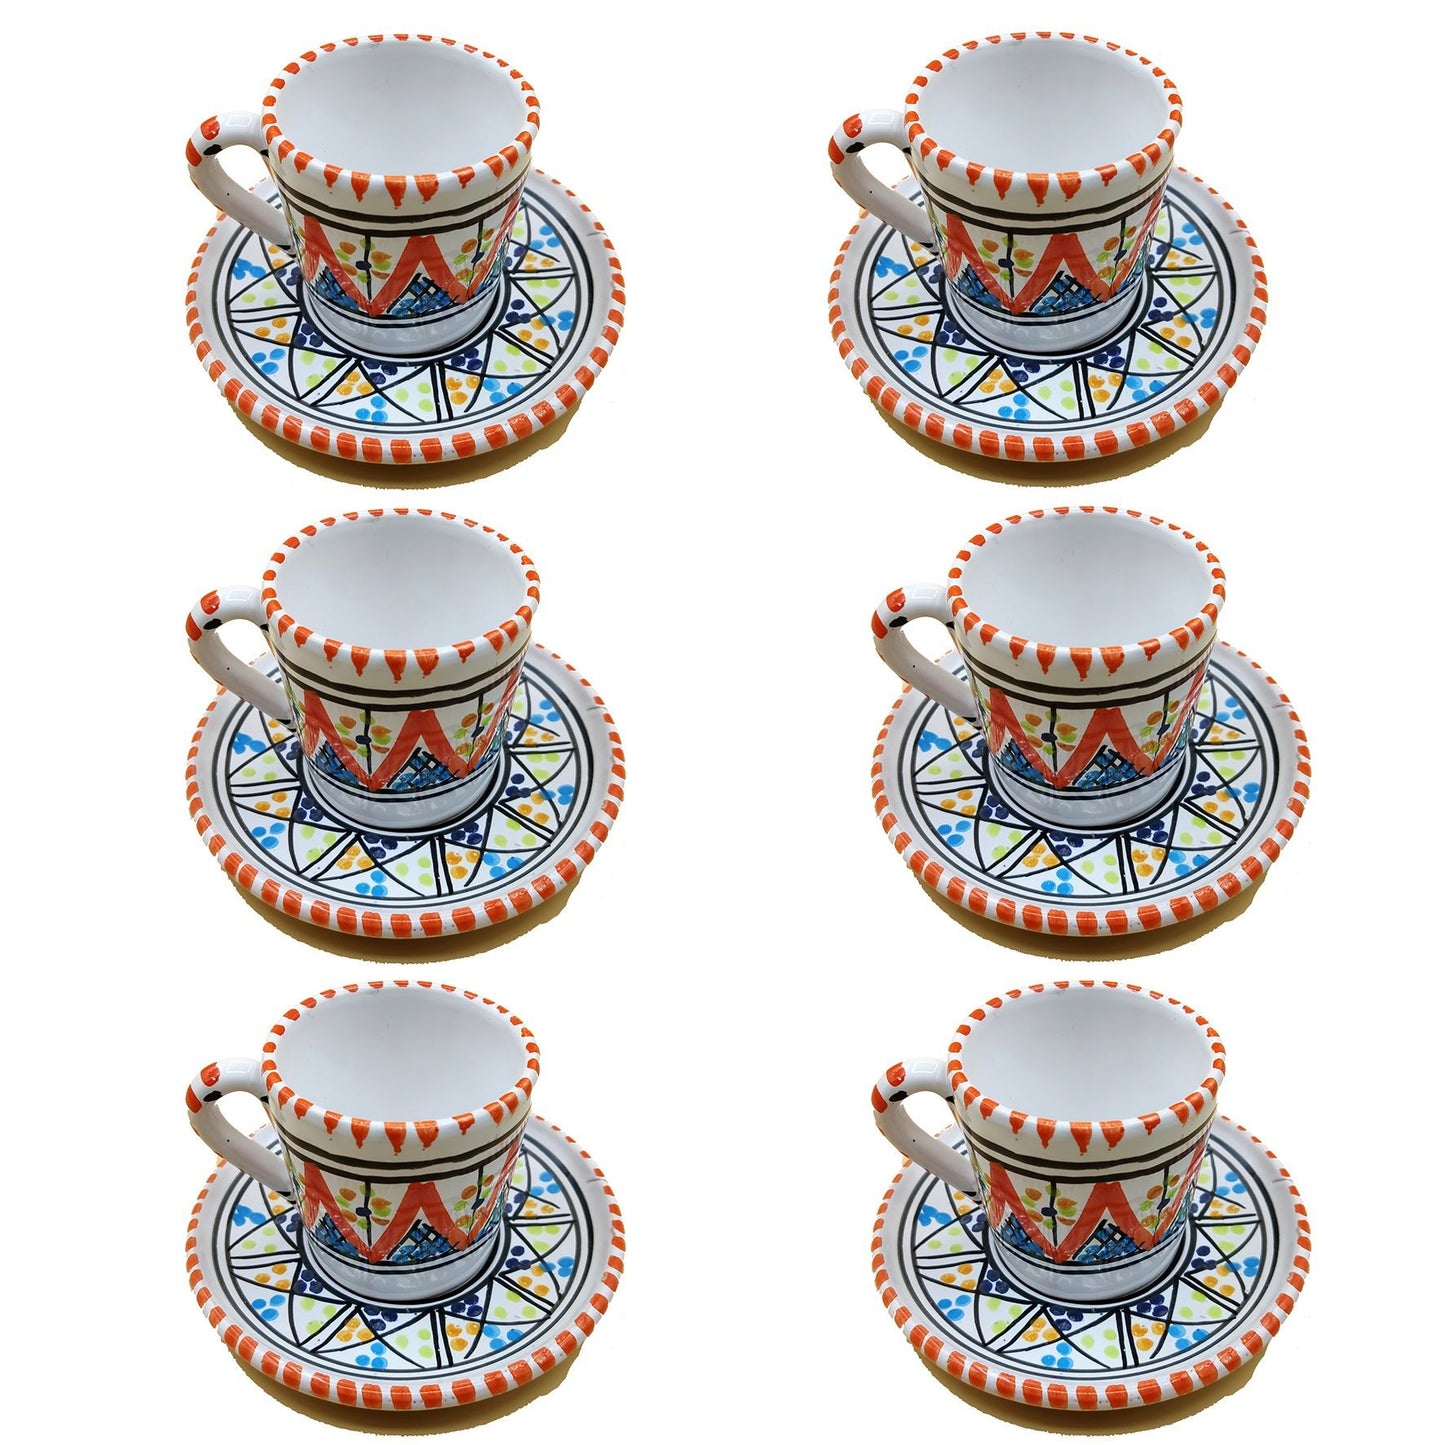 Koffiekopjesset handbeschilderd Tunesisch Marokkaans keramiek 1211200919